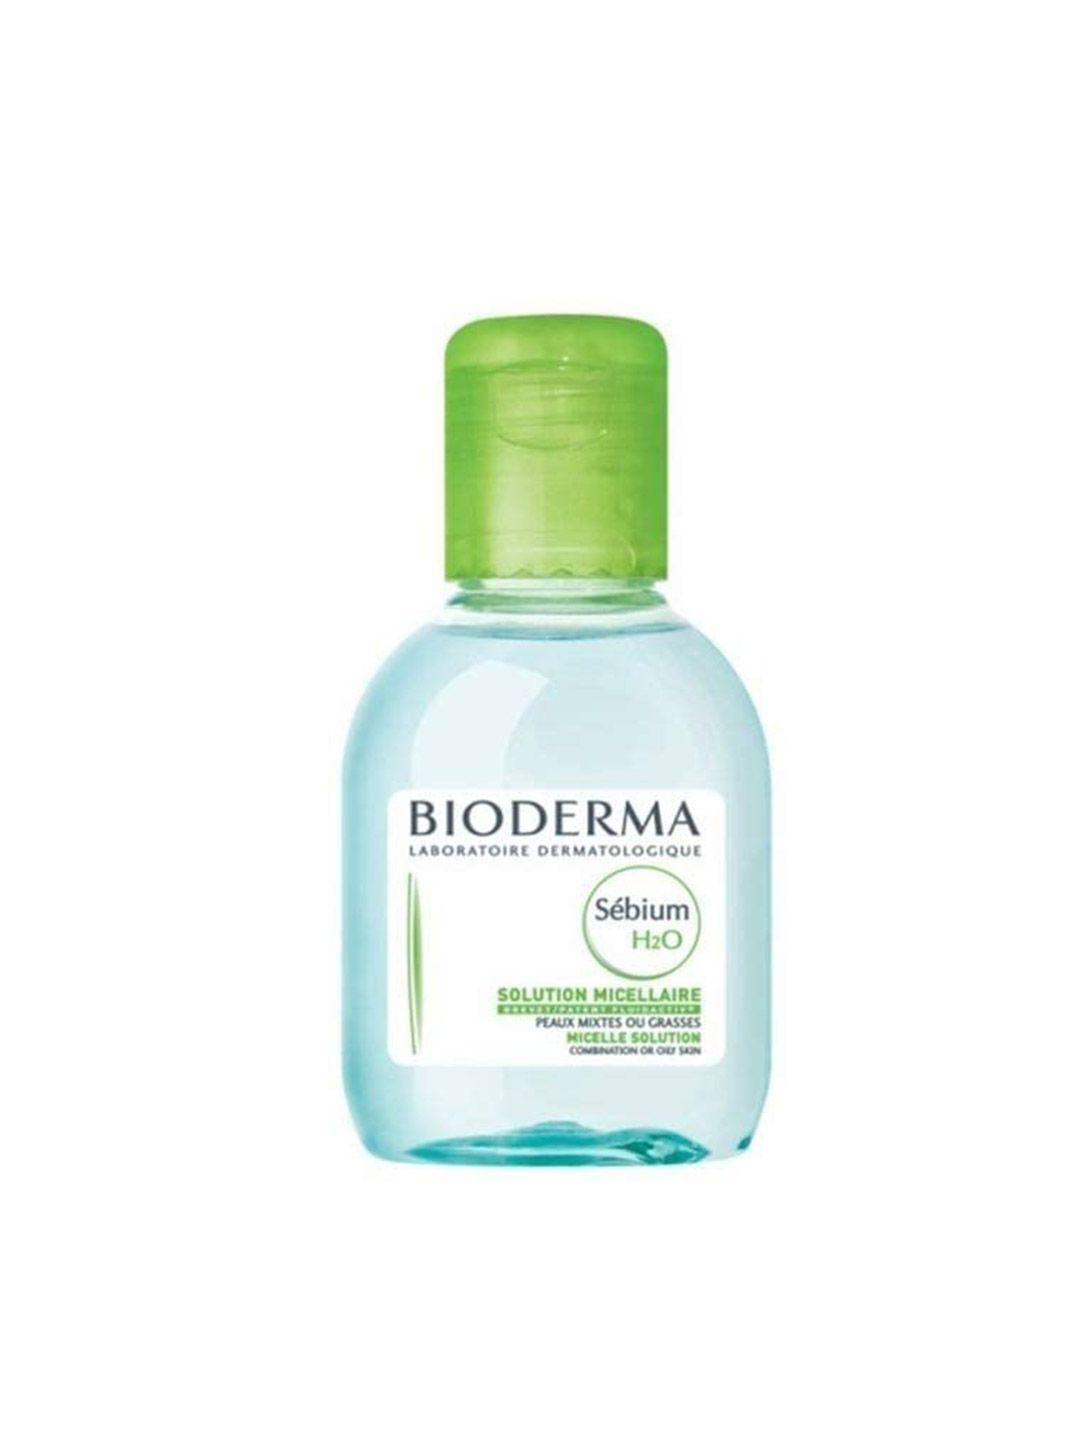 bioderma sebium h2o purifying micellar cleansing water makeup remover - 100 ml